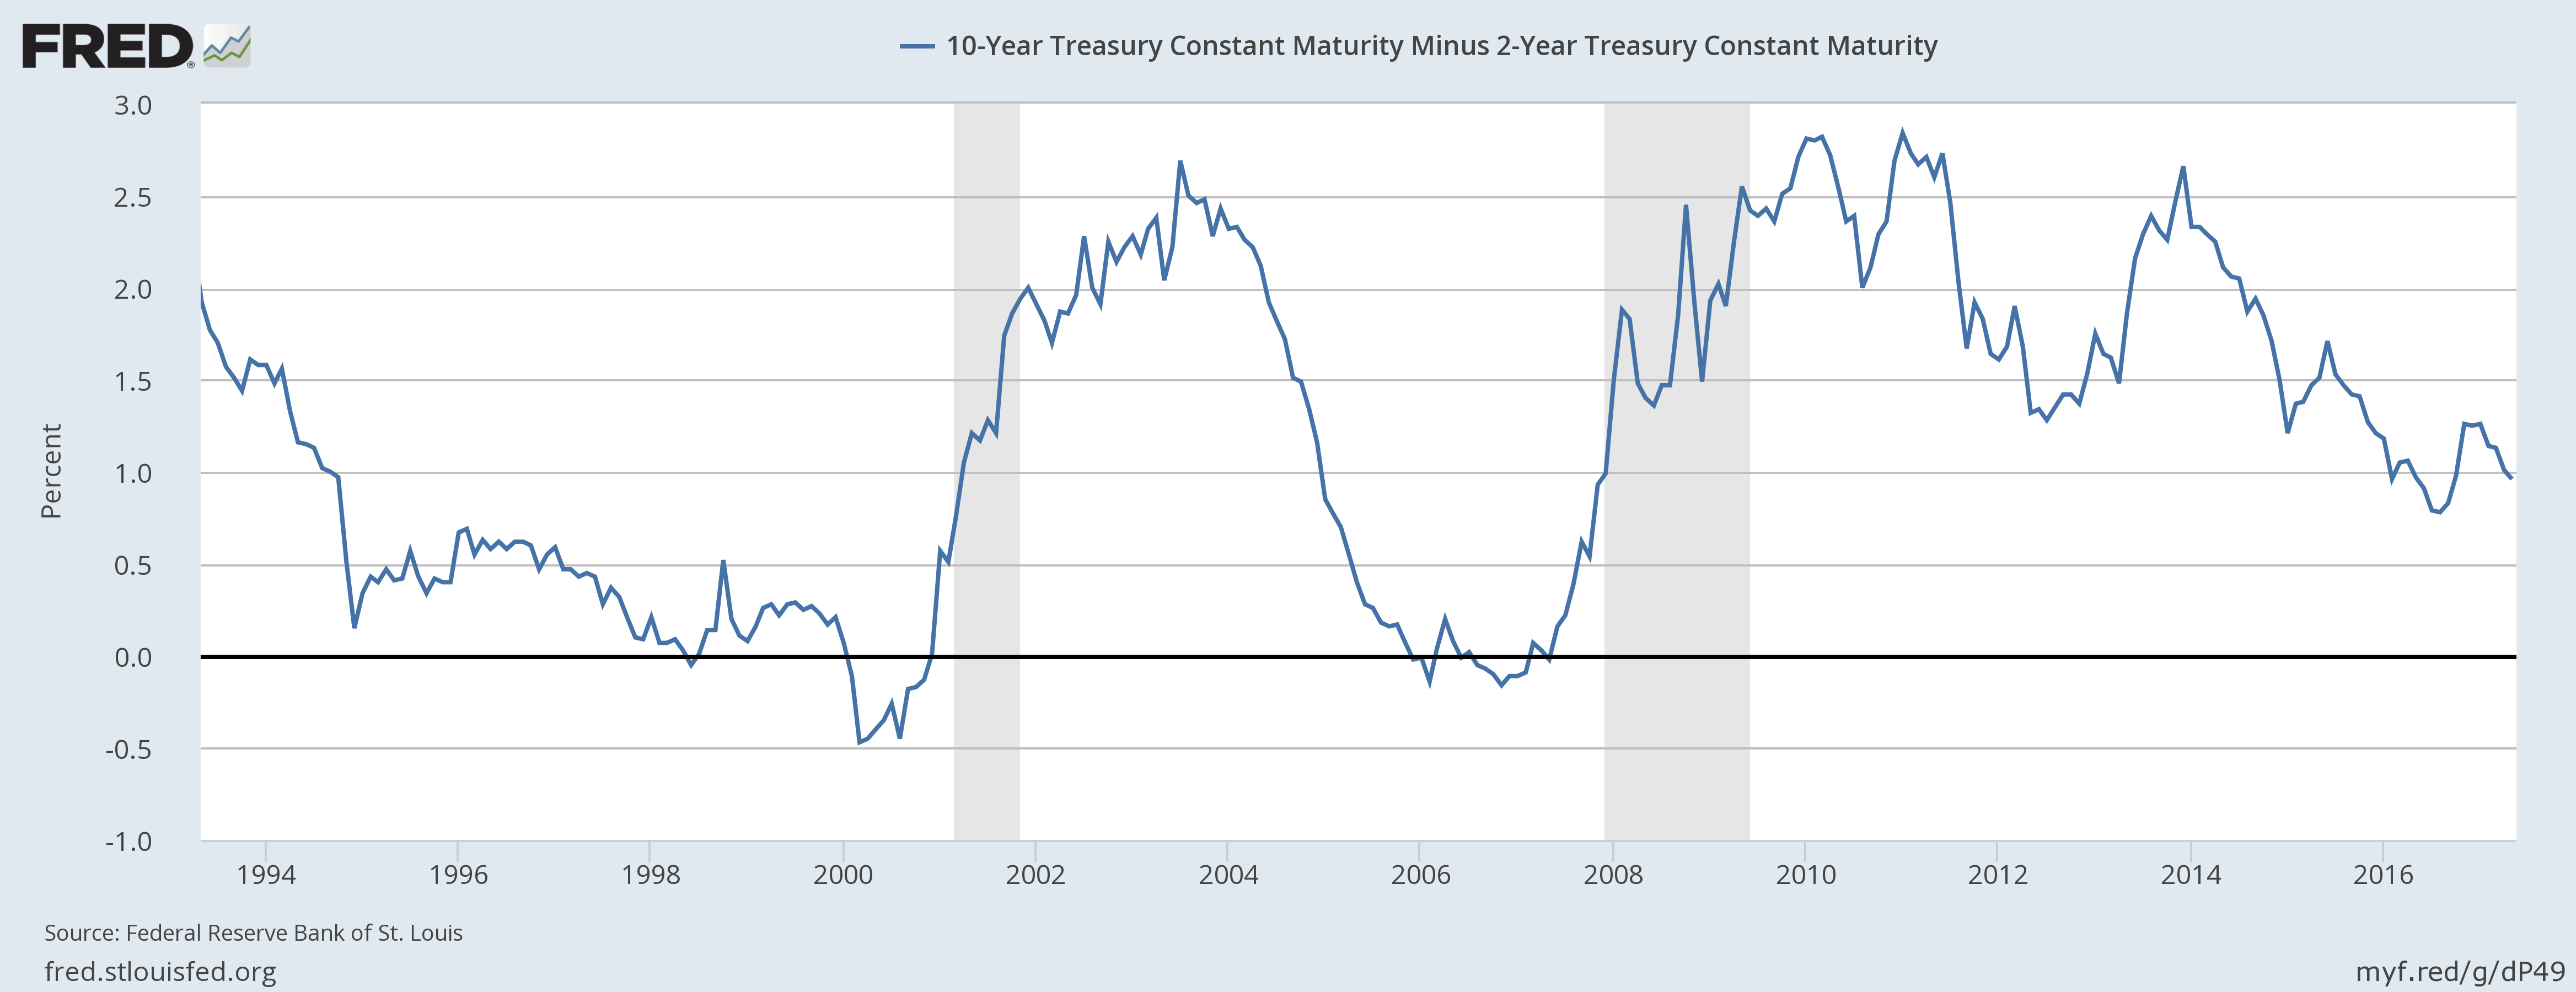 10 - Year Treasury Constant Maturity Minus 2 - Year Constant Maturity, 1994 - 2017